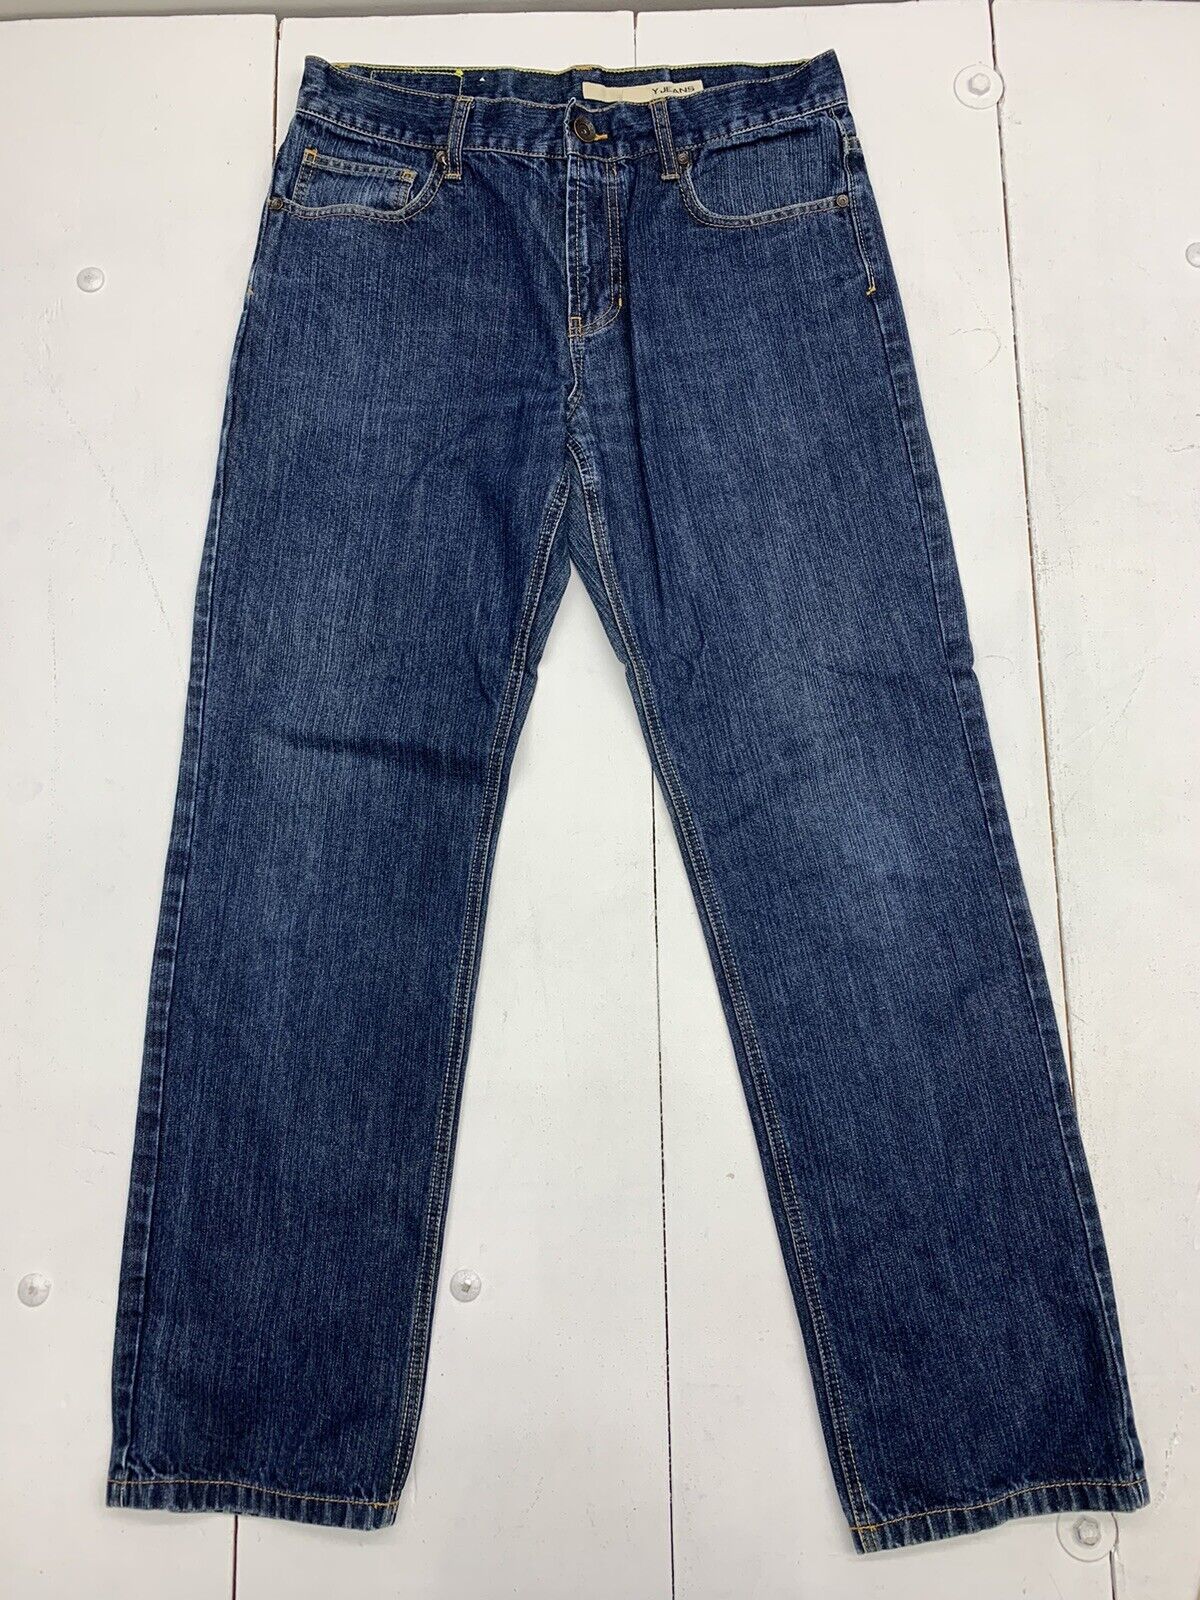 DKNY Brooklyn Mens Blue Denim Jeans Size 33/32 - beyond exchange